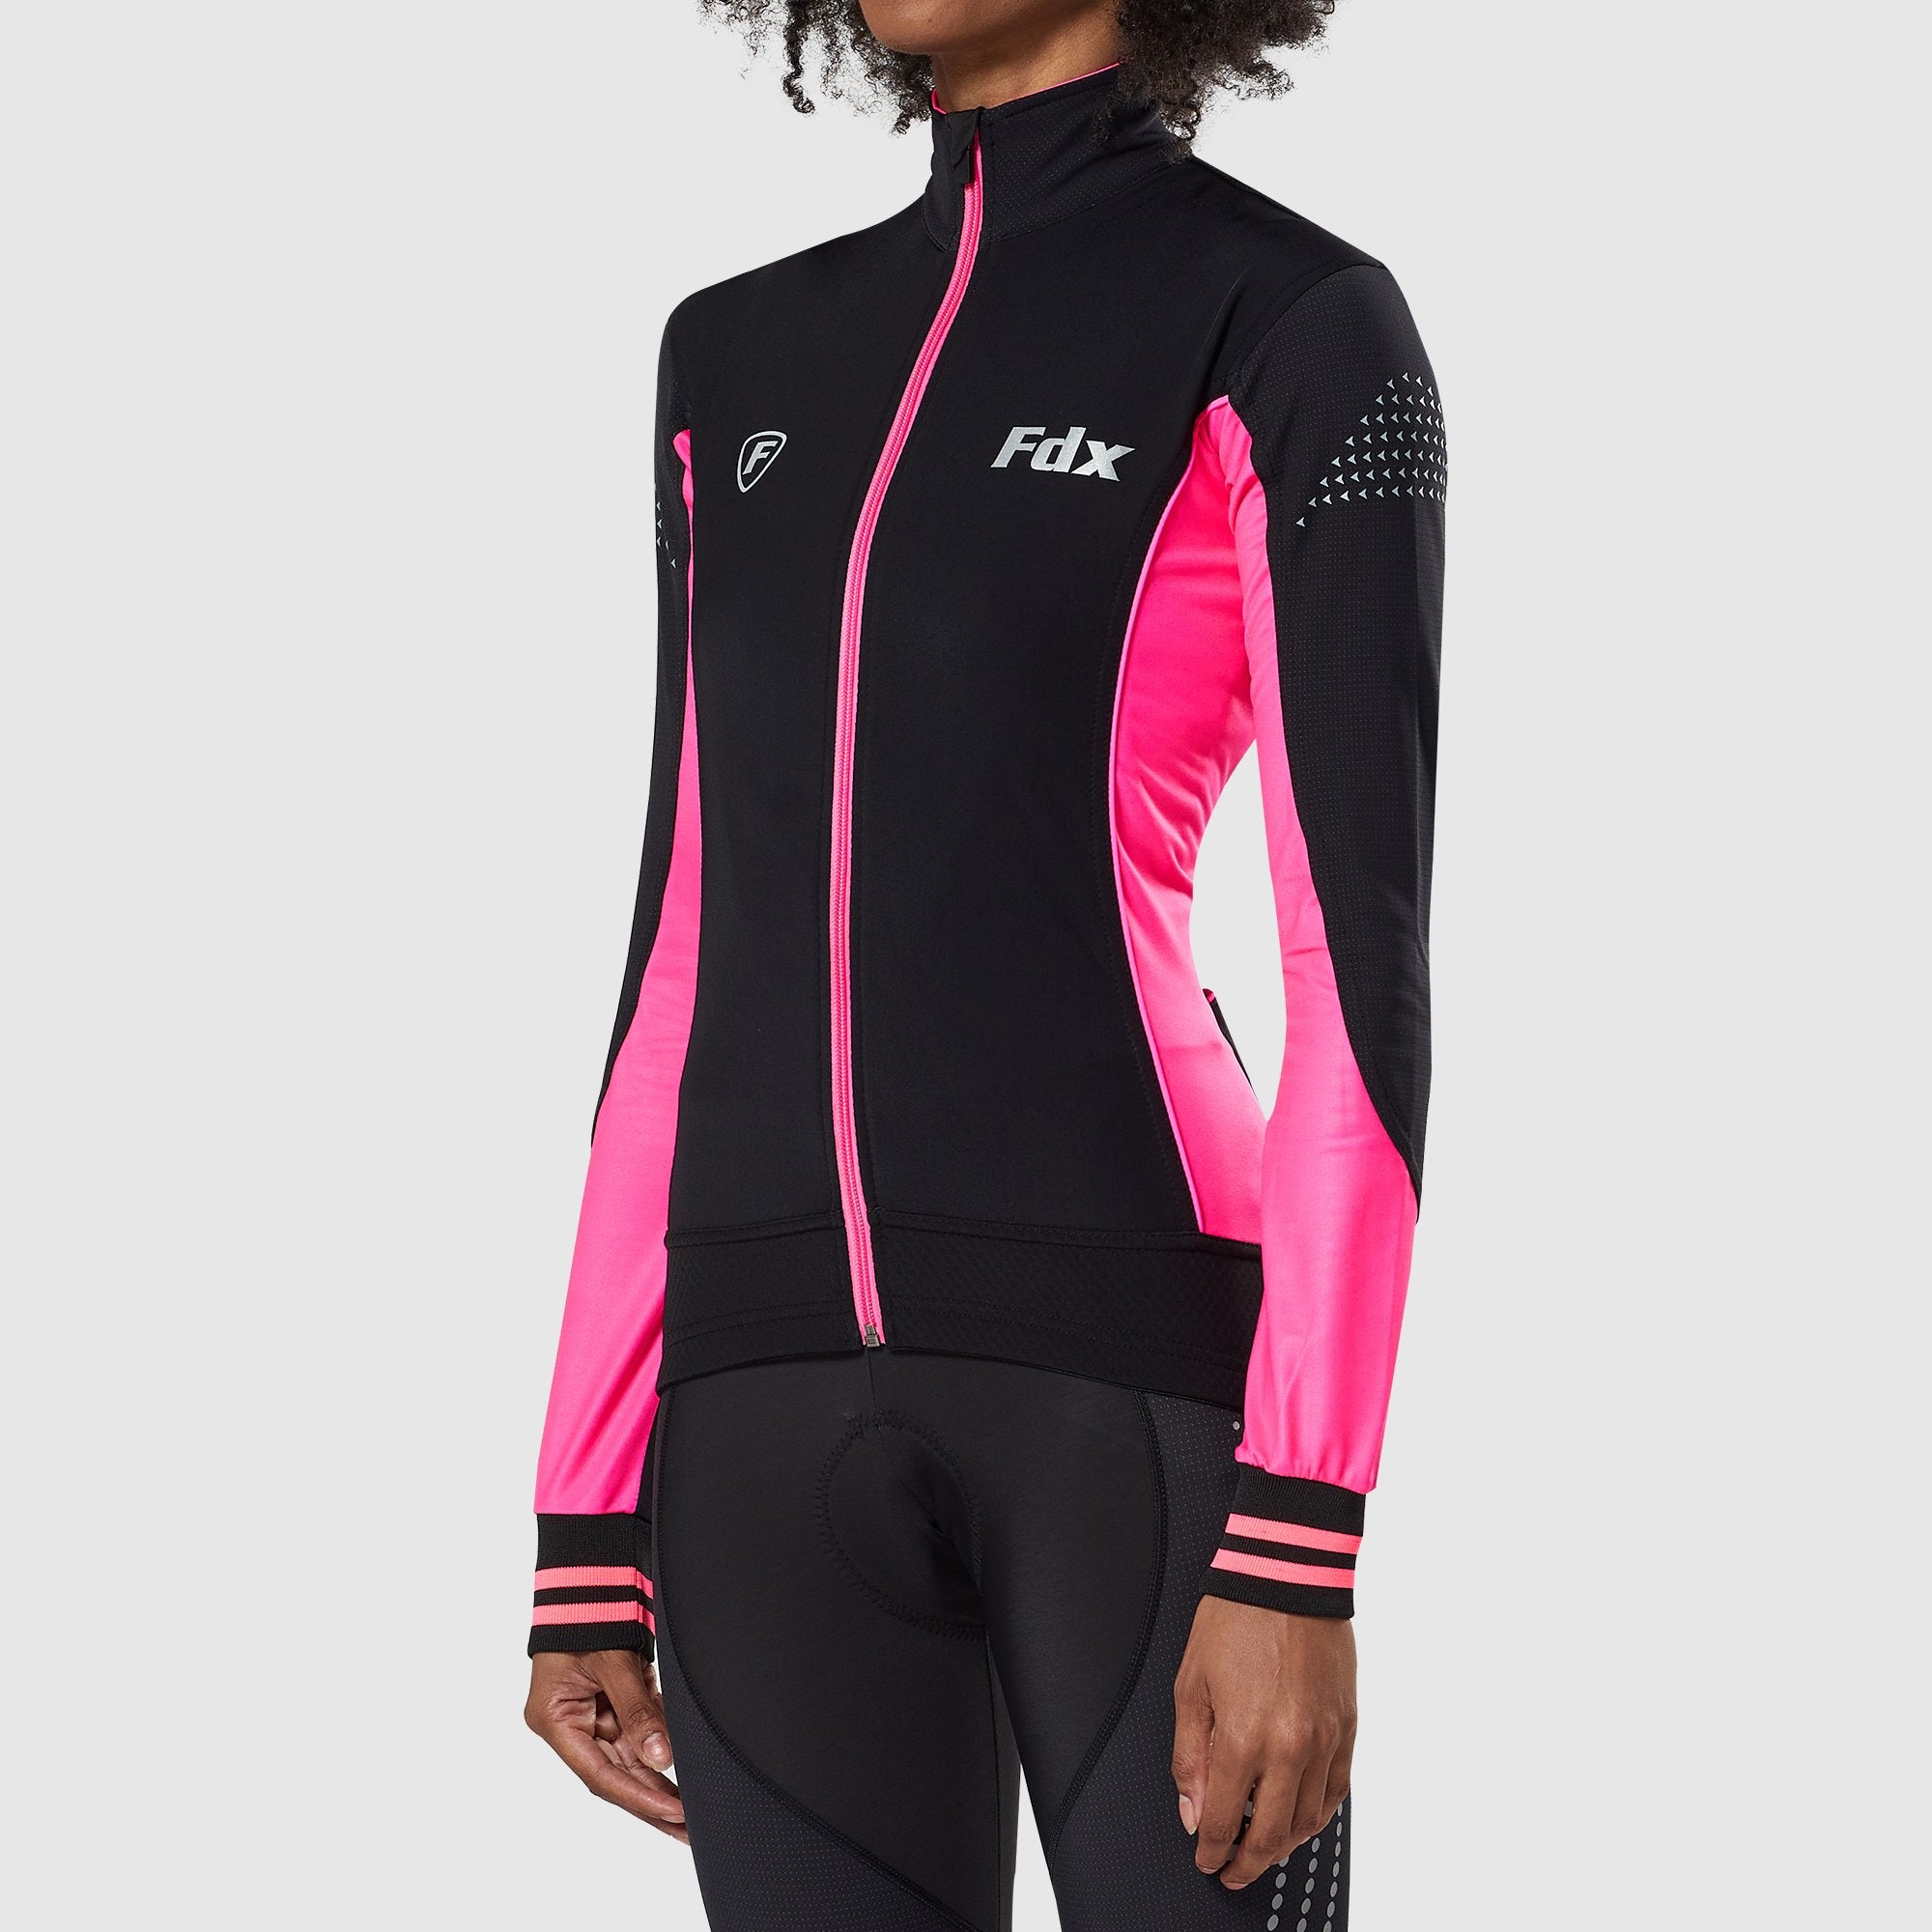 Fdx Thermodream Women's Winter Cycling Jersey Pink & Purple | FDX - FDX Sports US